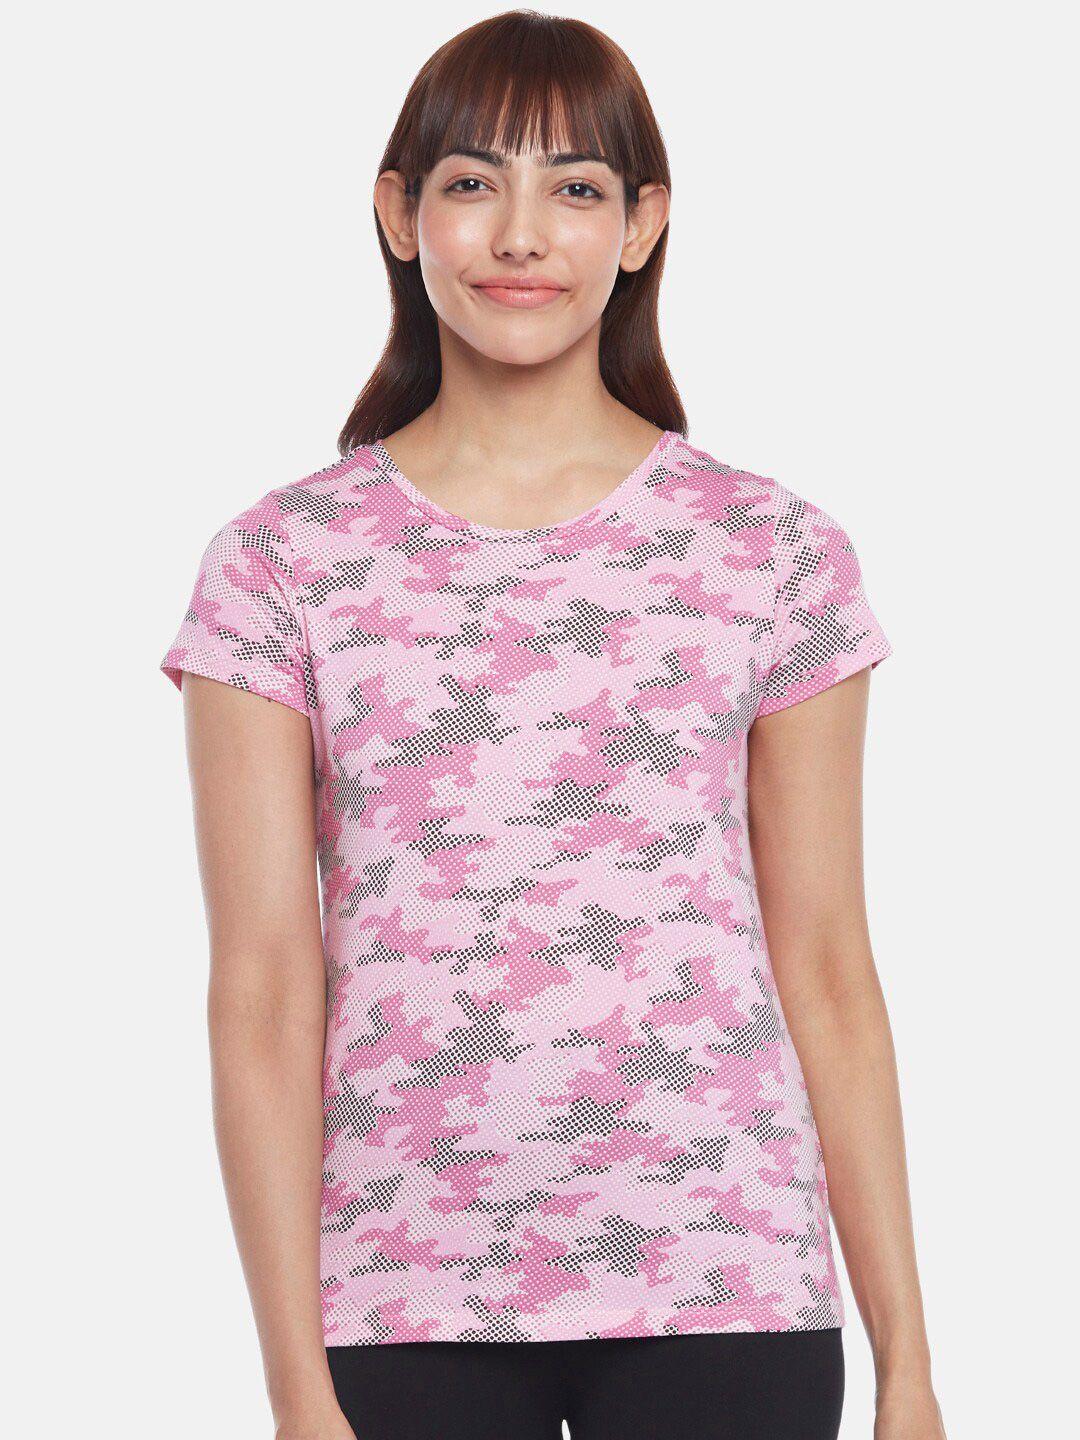 ajile-by-pantaloons-women-pink-camouflage-printed-t-shirt